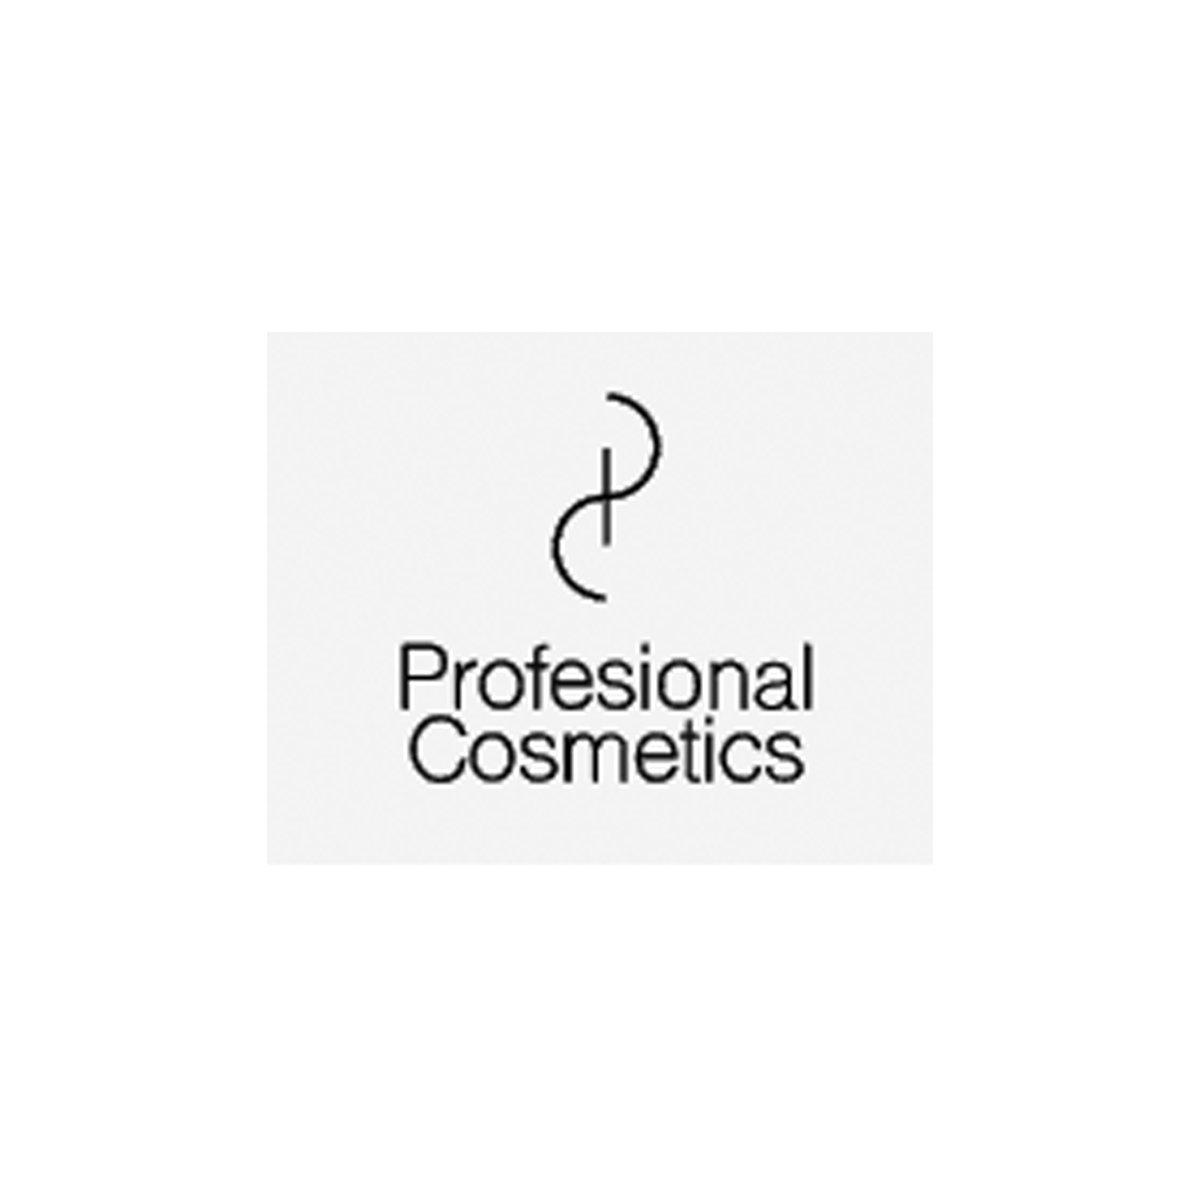 Profesional Cosmetics